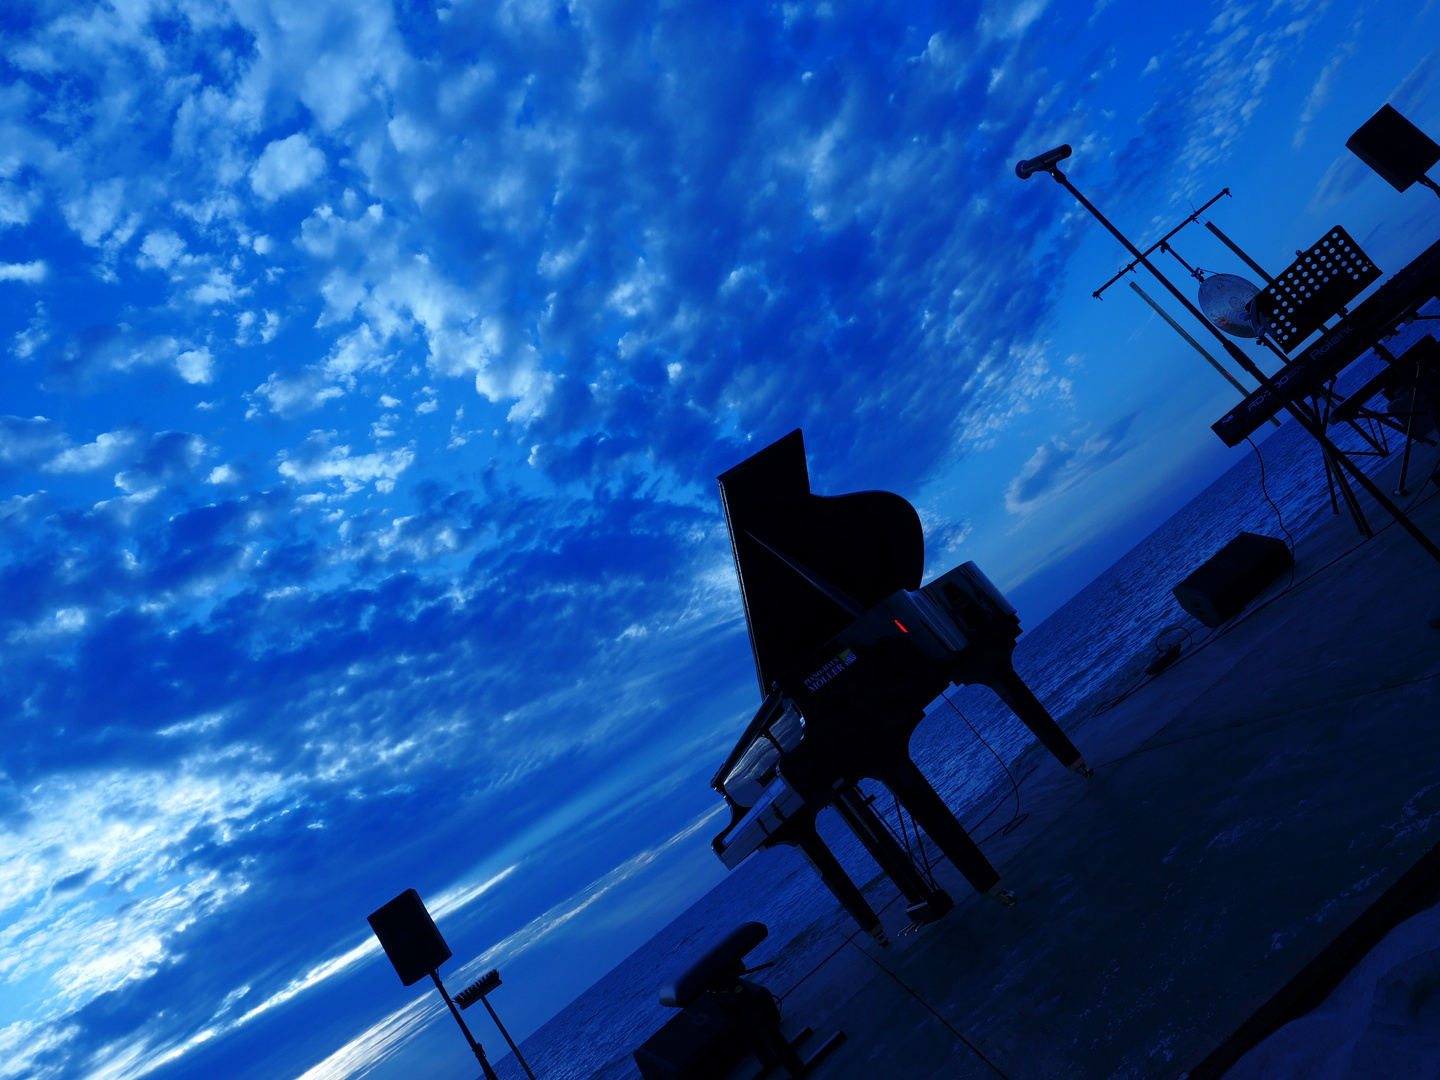 Sunset Piano Concert